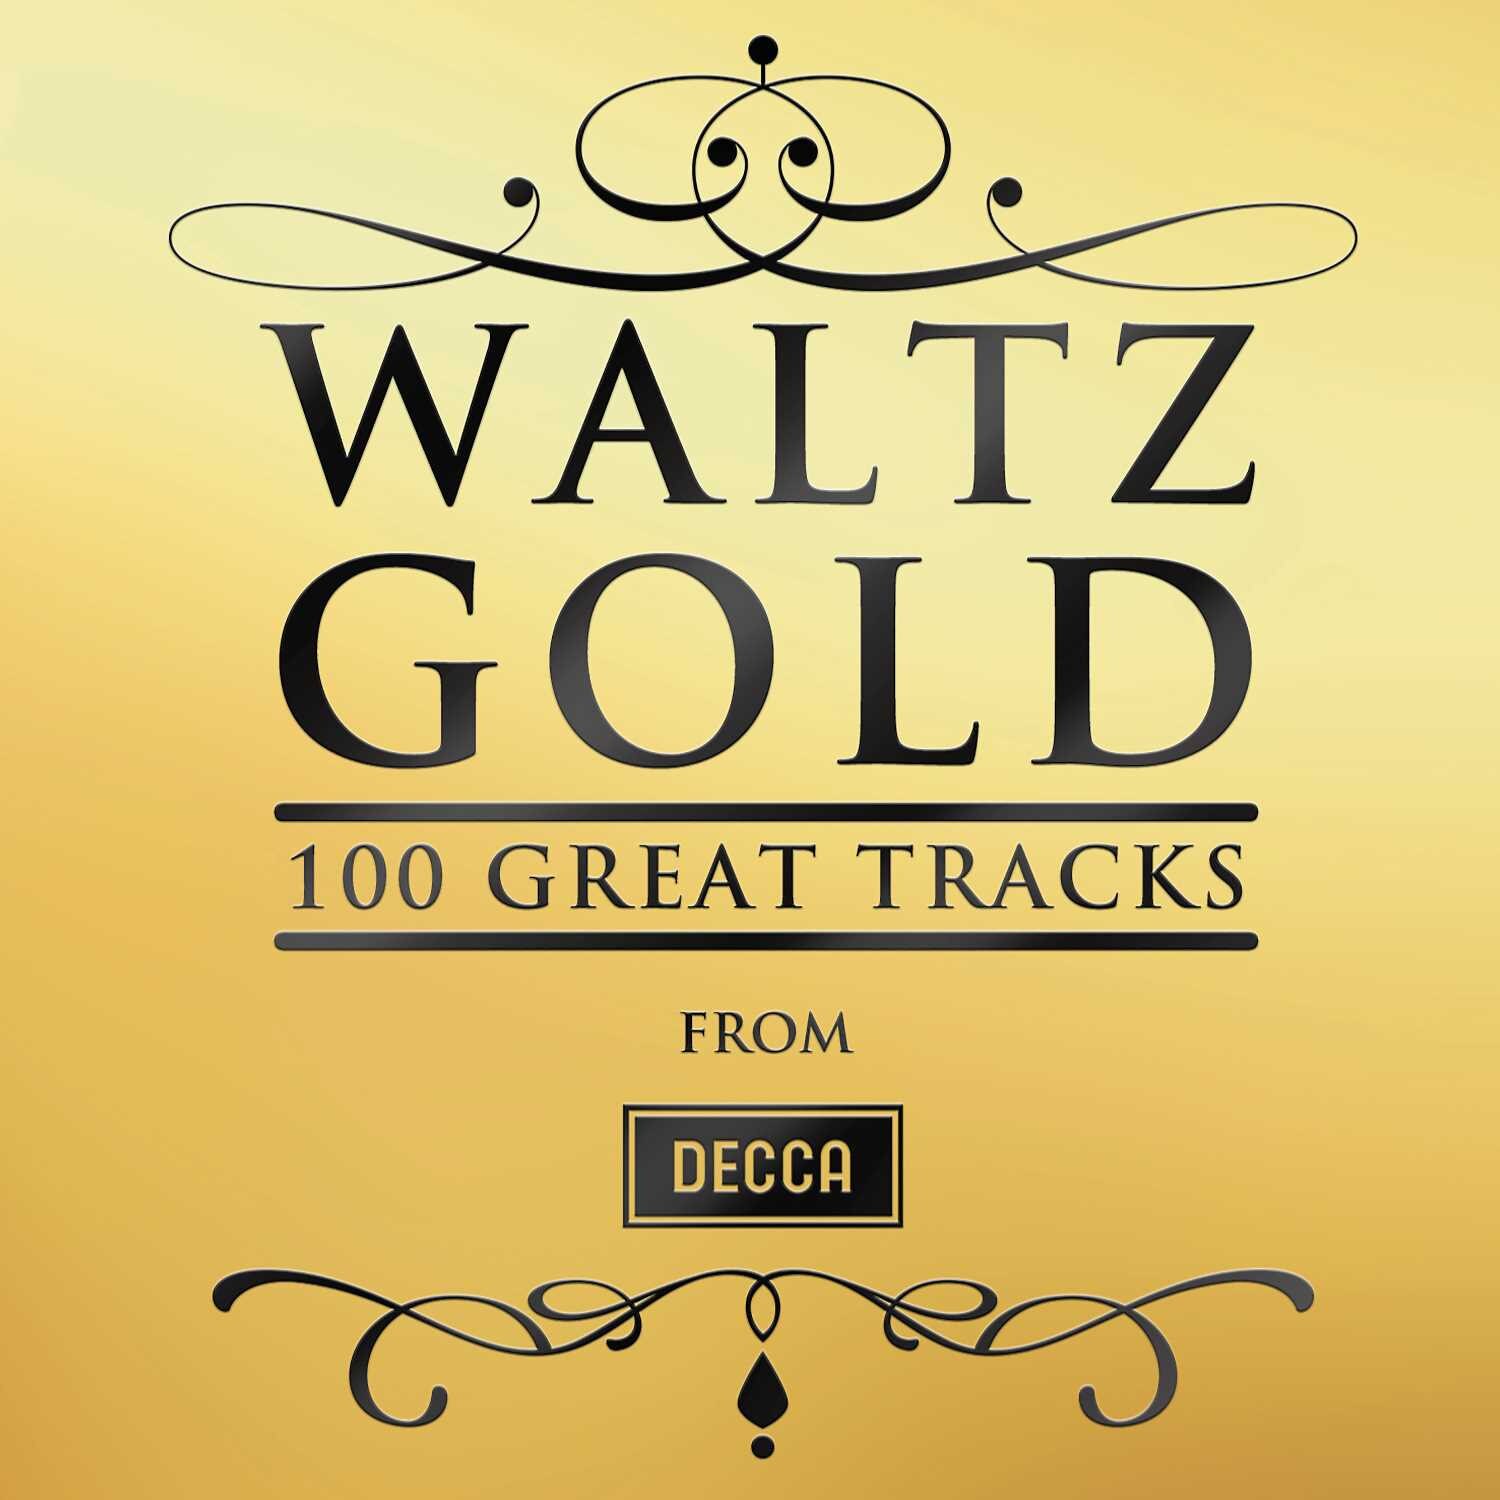 Waltz　(6　CDs)　CD　album　Various　Gold　Great　Artists　100　Tracks